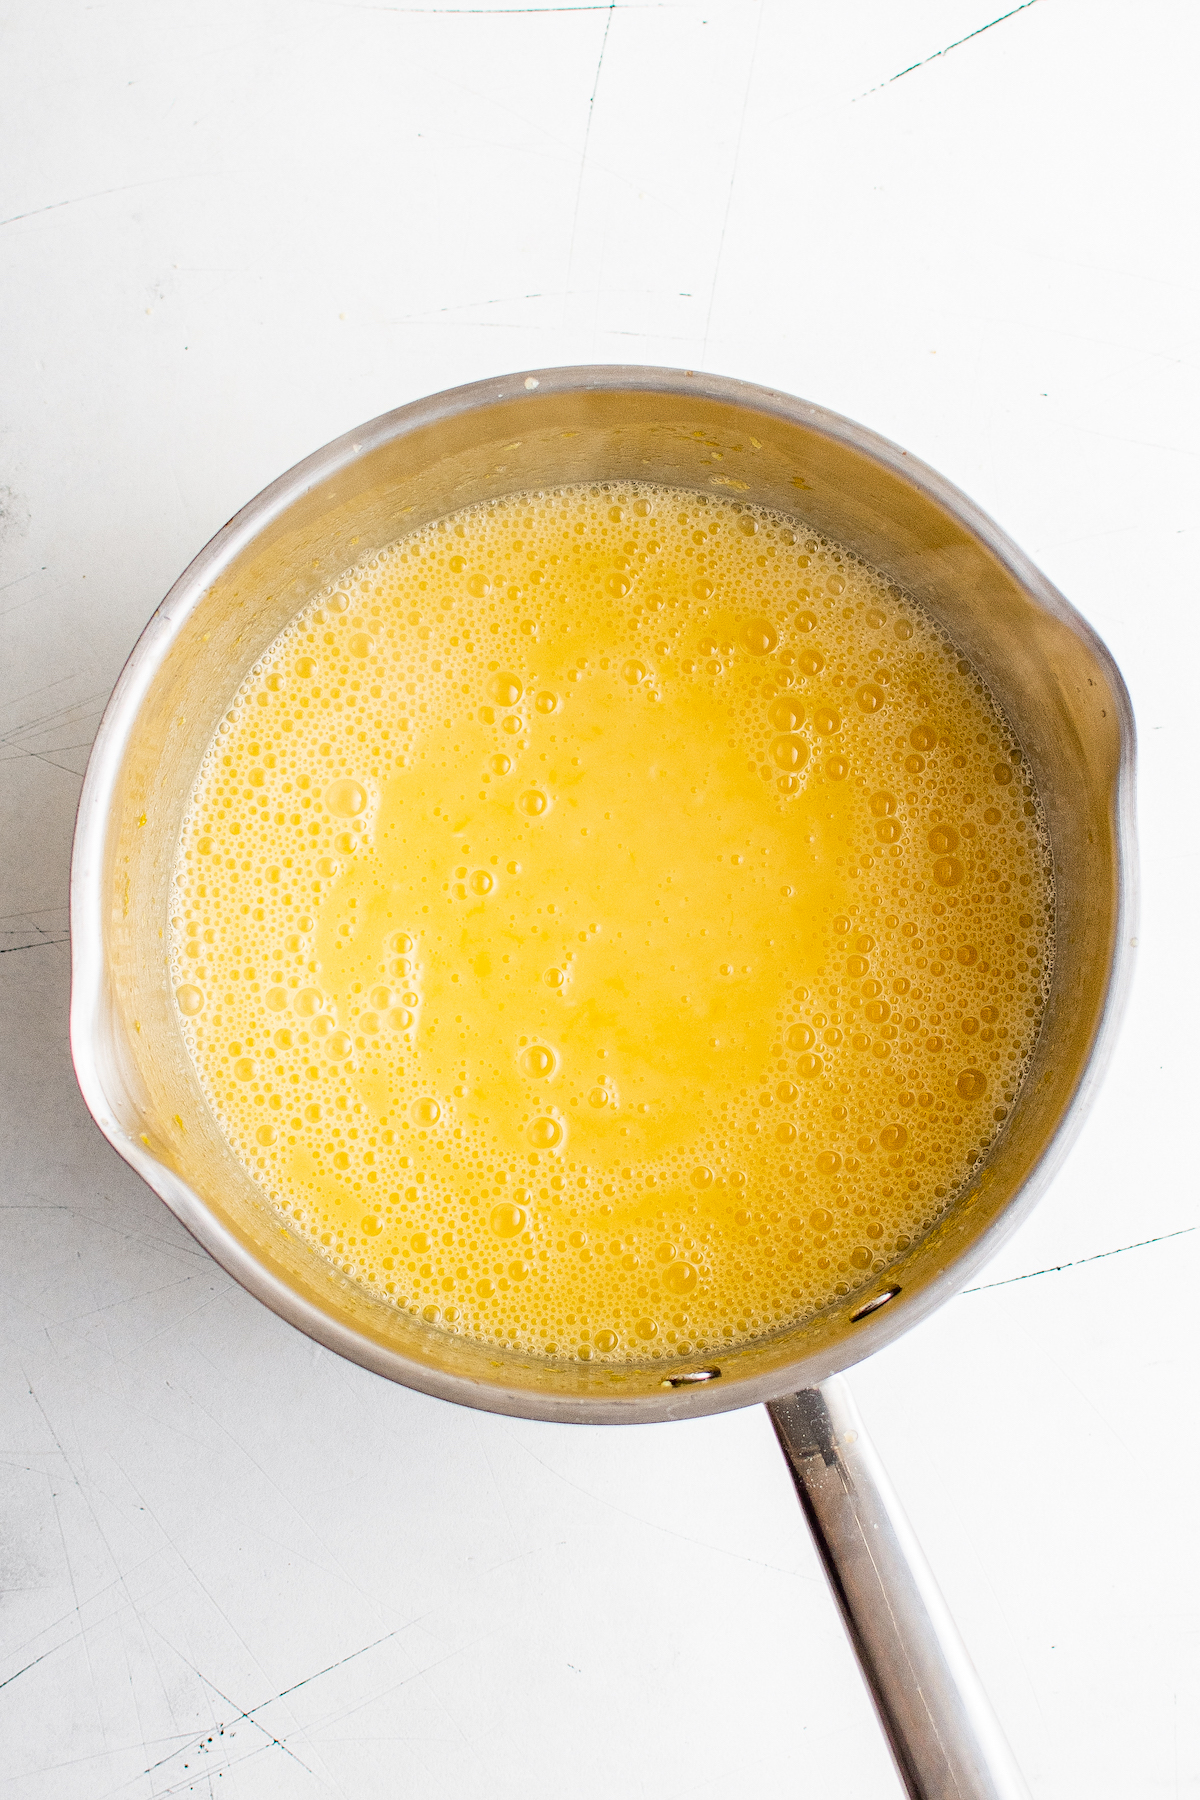 A mixture of lemon, eggs, and sugar in a saucepan.